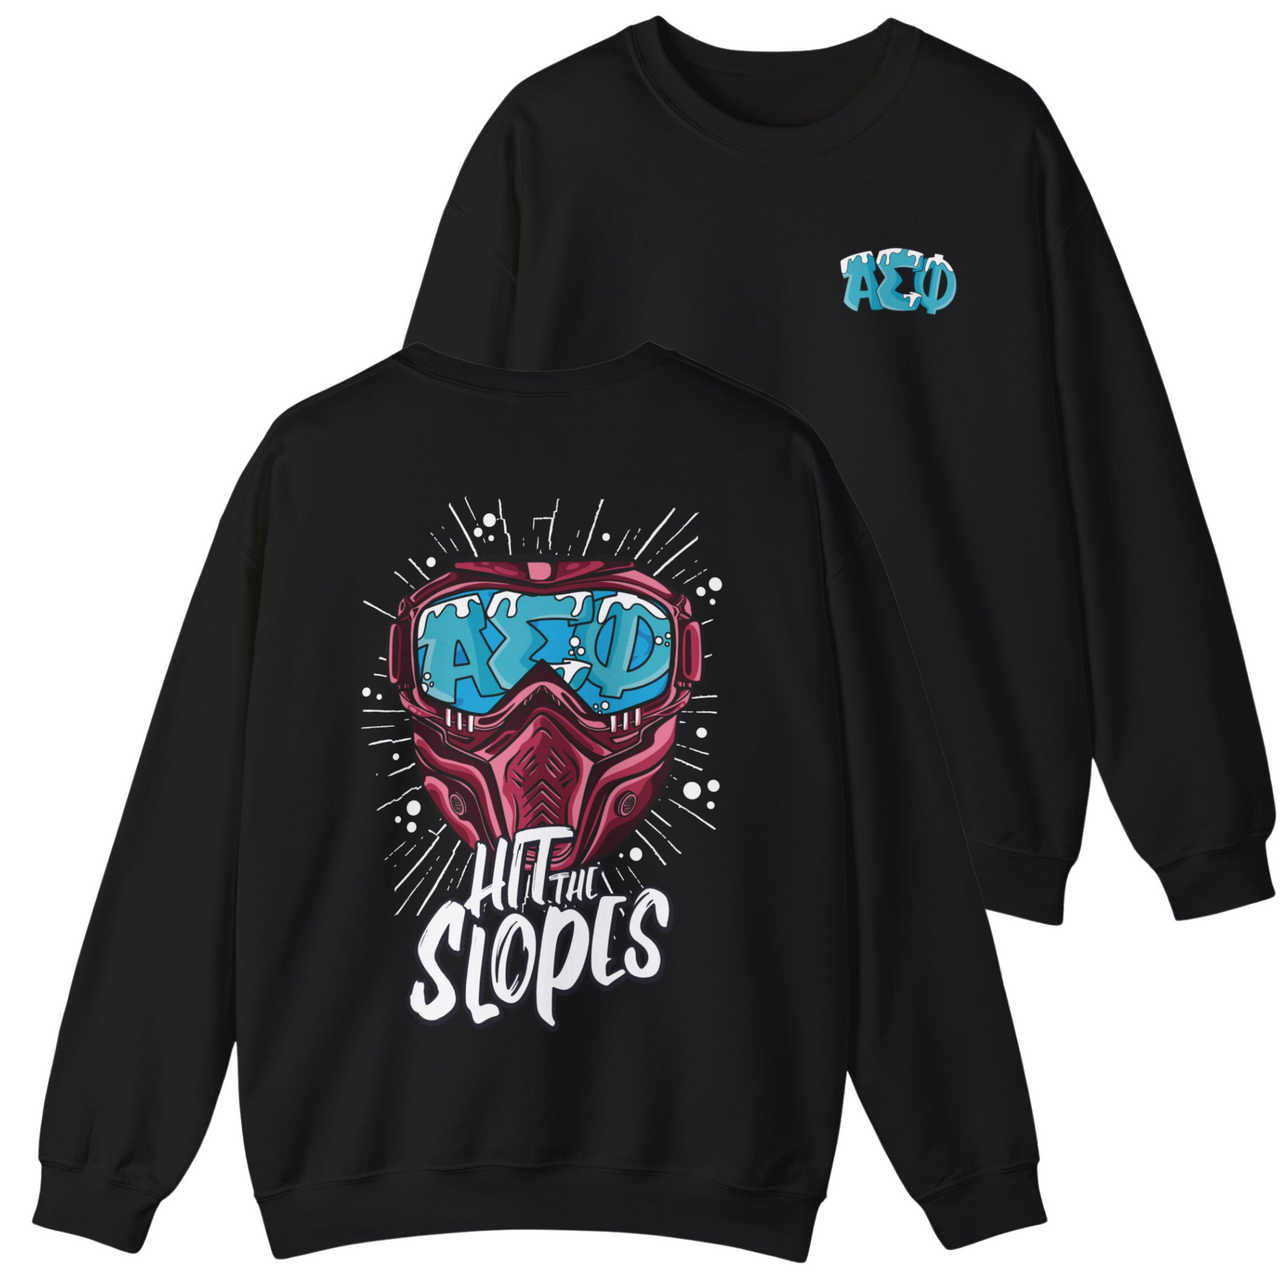 Alpha Sigma Phi Graphic Crewneck Sweatshirt | Hit the Slopes